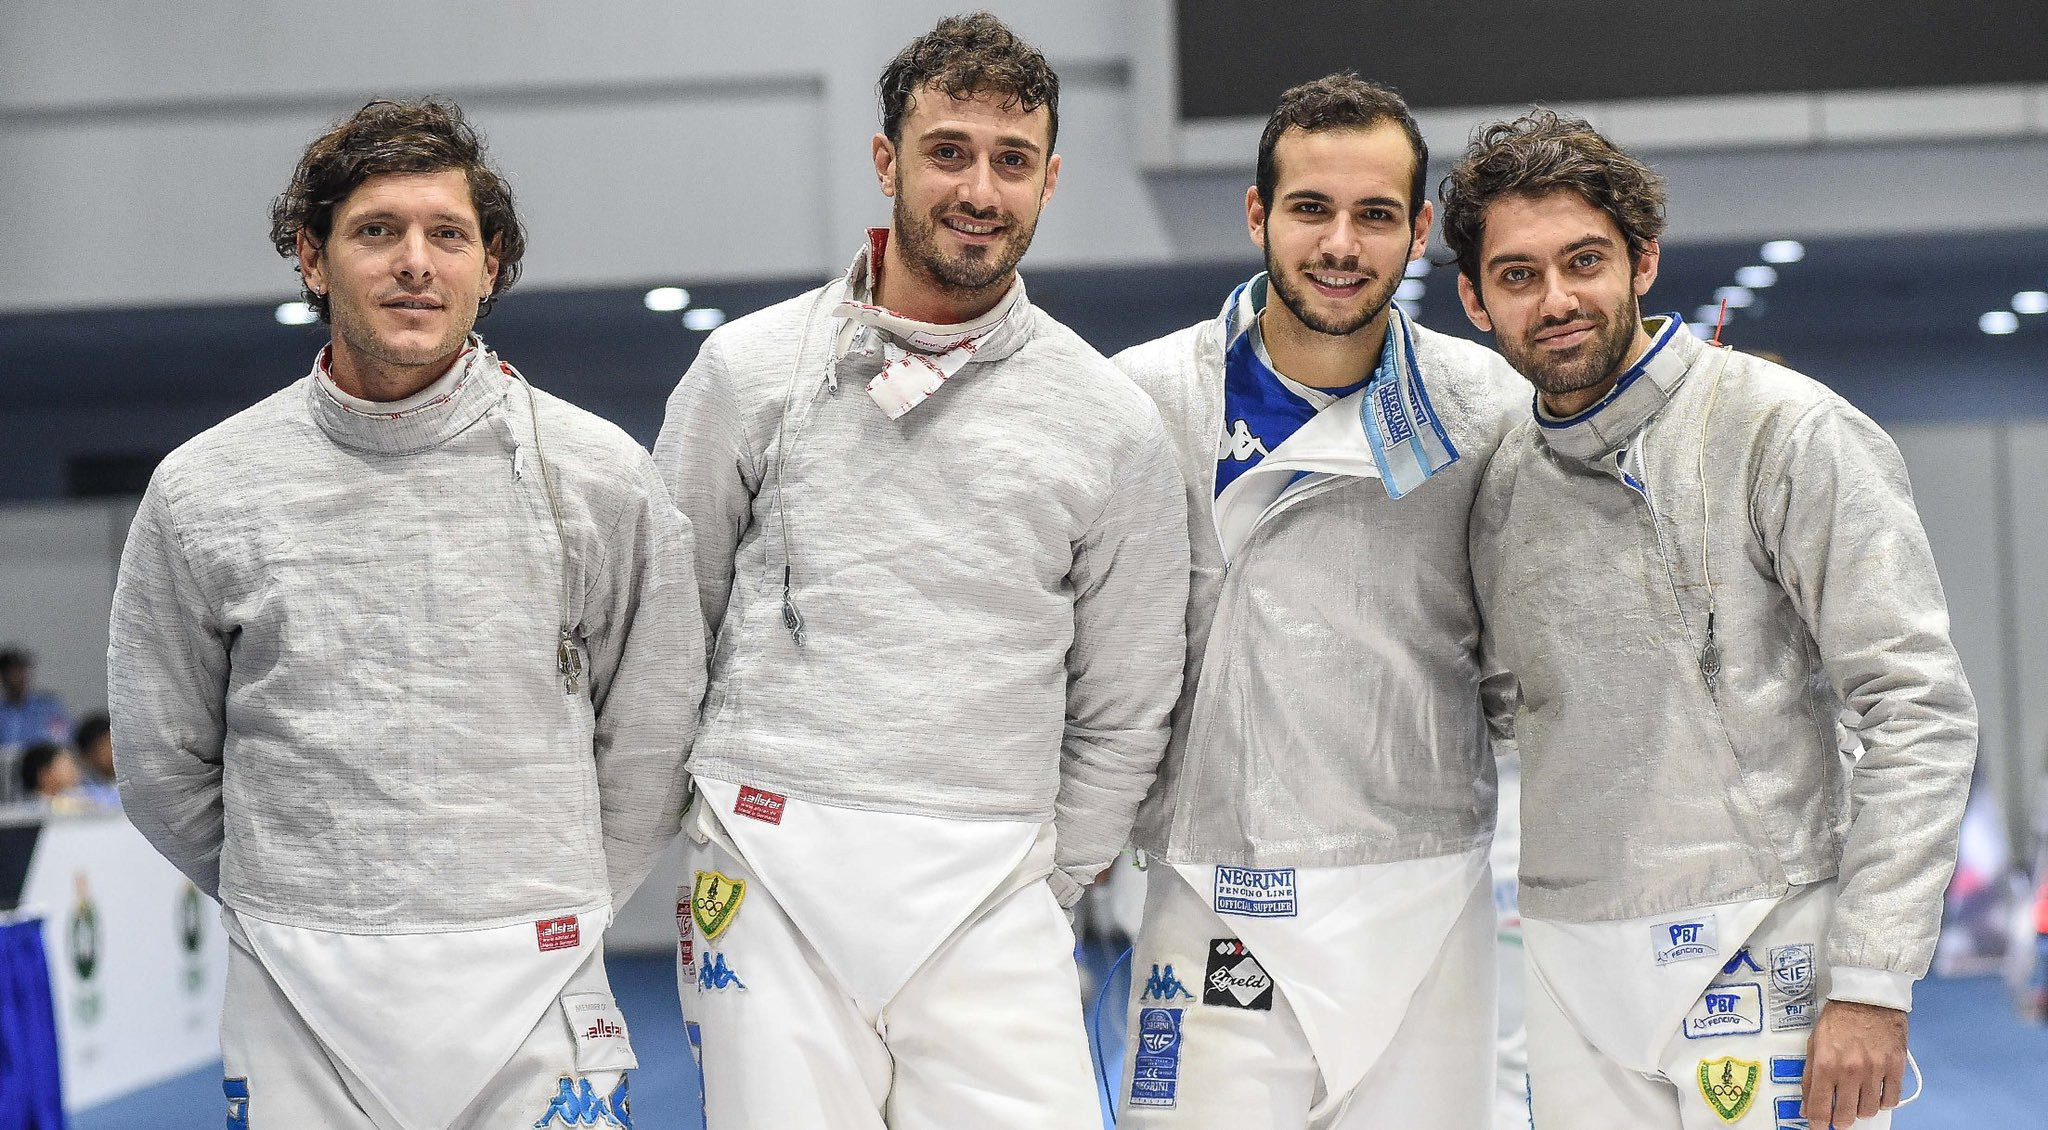 The Italian team of Enrico Berre, Luca Curatoli, Aldo Montano and Luigi Samuele defeated Russia to claim bronze in Cairo ©Italian Fencing Federation